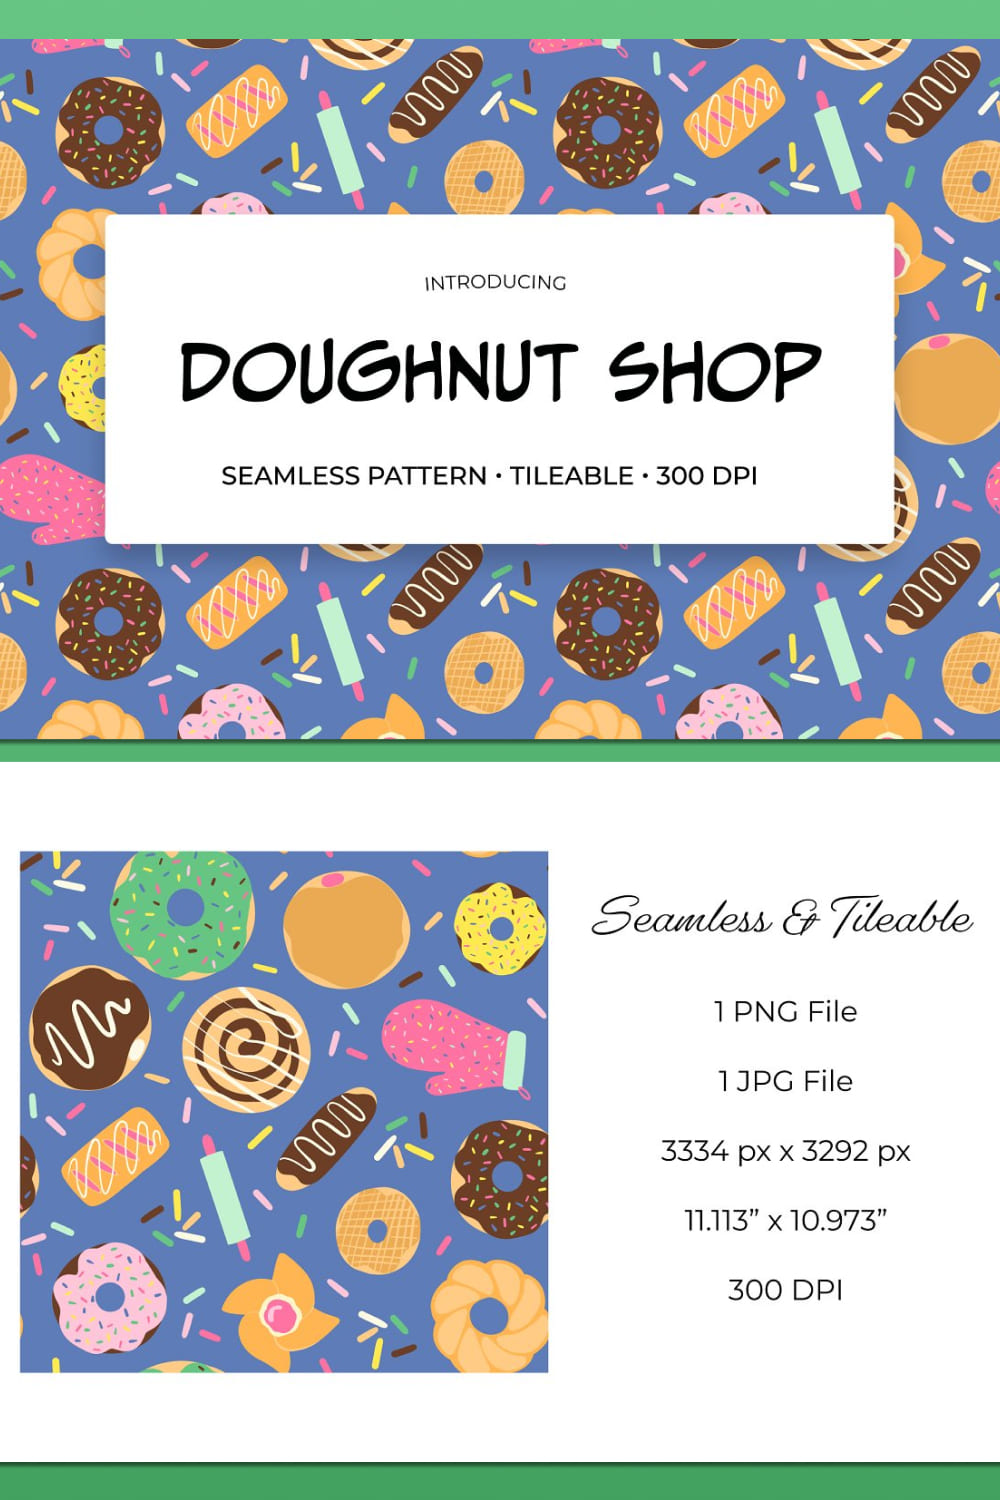 Doughnut shop seamless pattern - pinterest image preview.